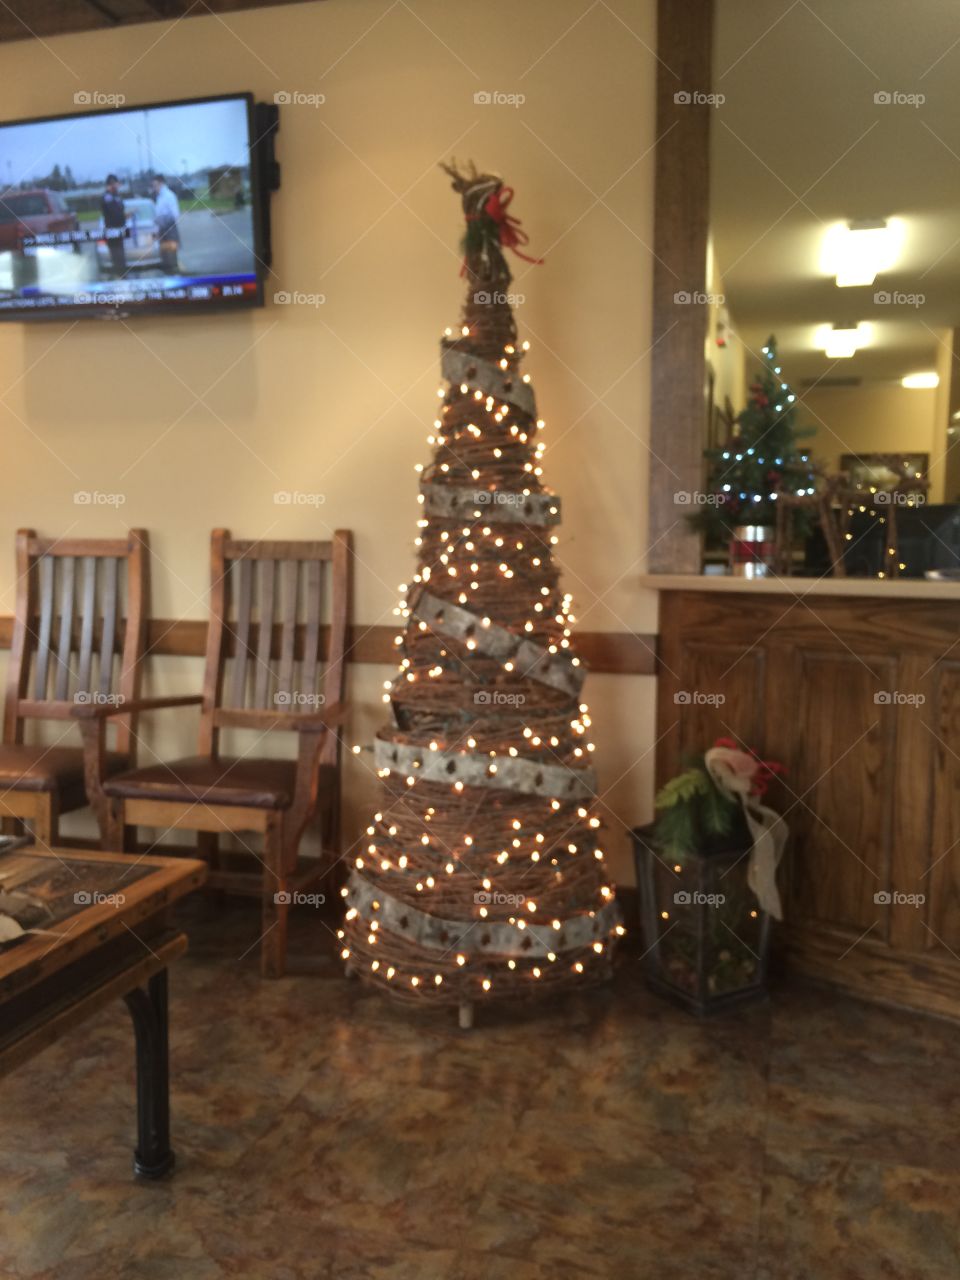 Country Christmas tree